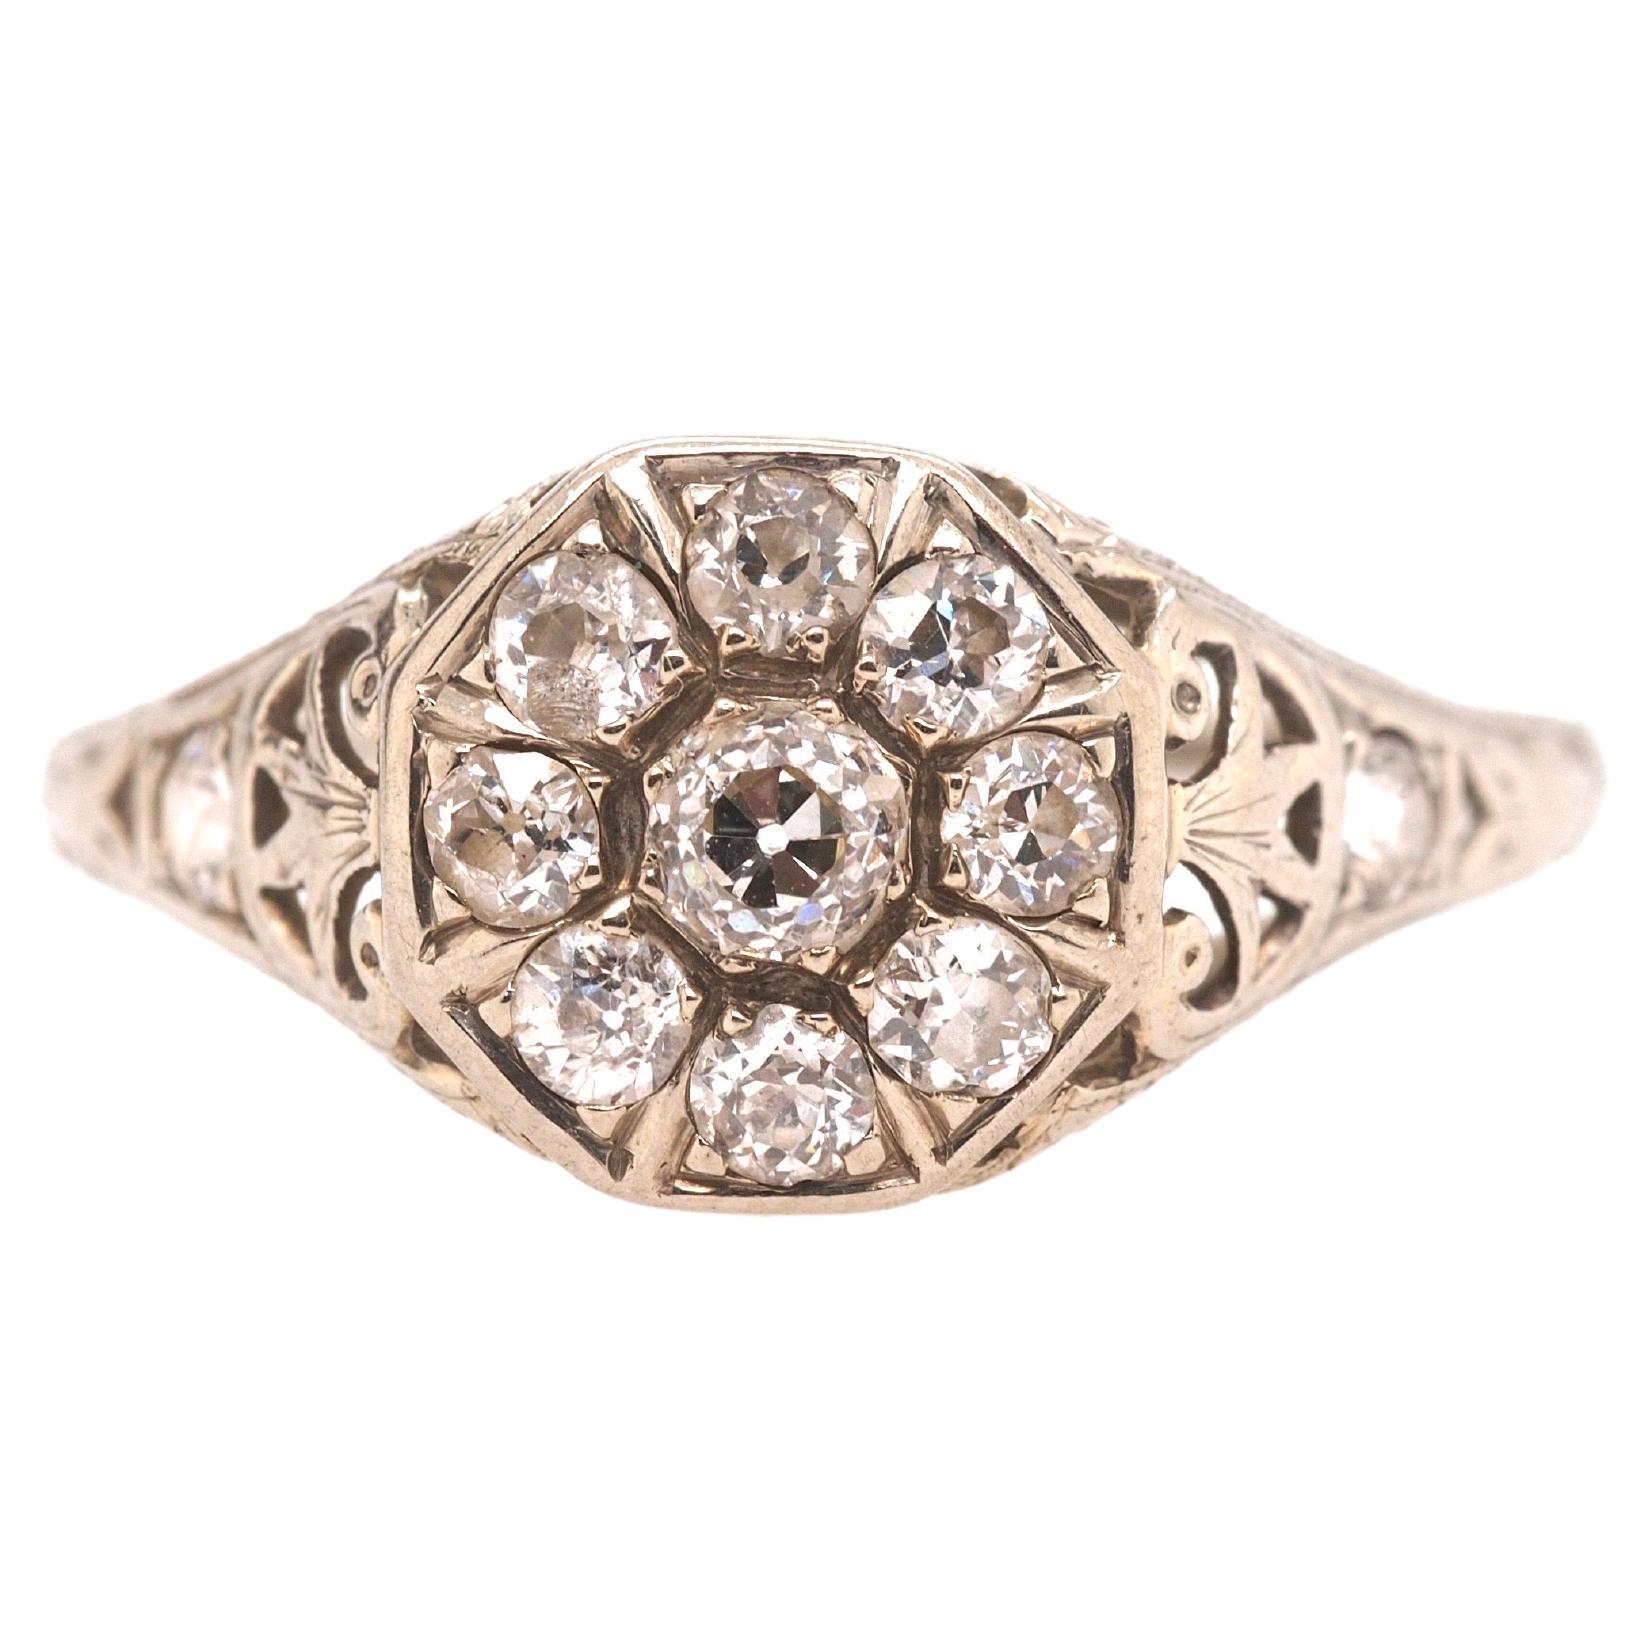 1910 Edwardian 18K White Gold/Platinum .75cttw Old Mine Diamond Engagement Ring For Sale